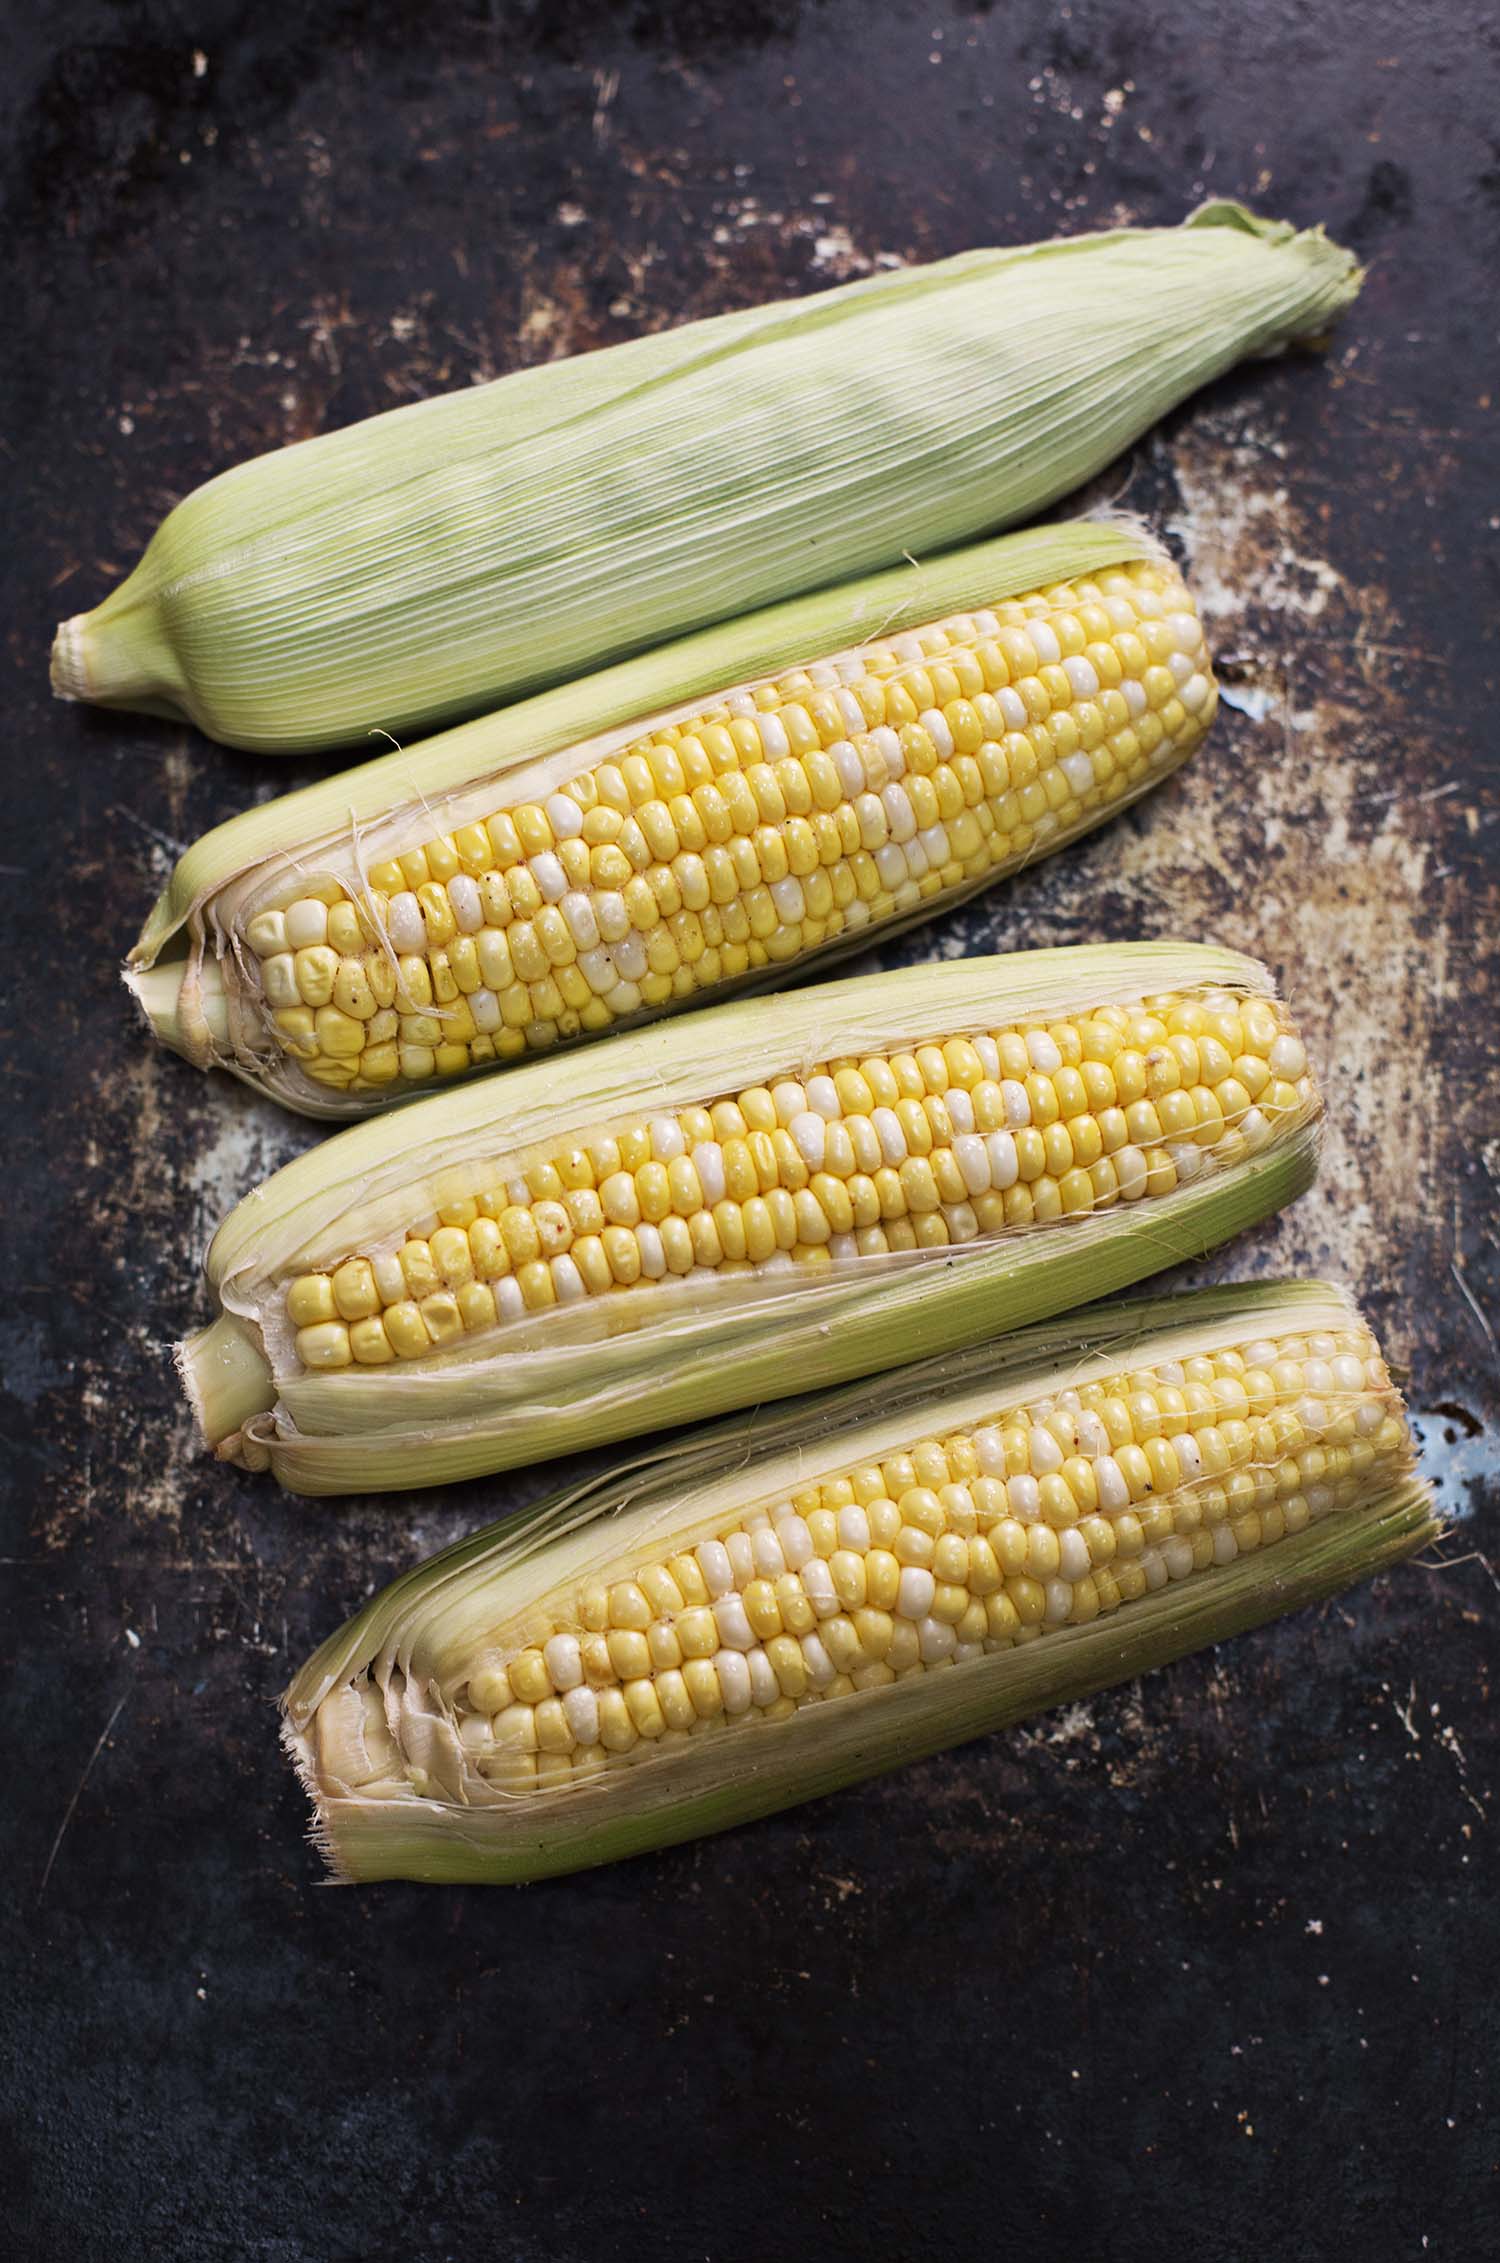 Roasting corn